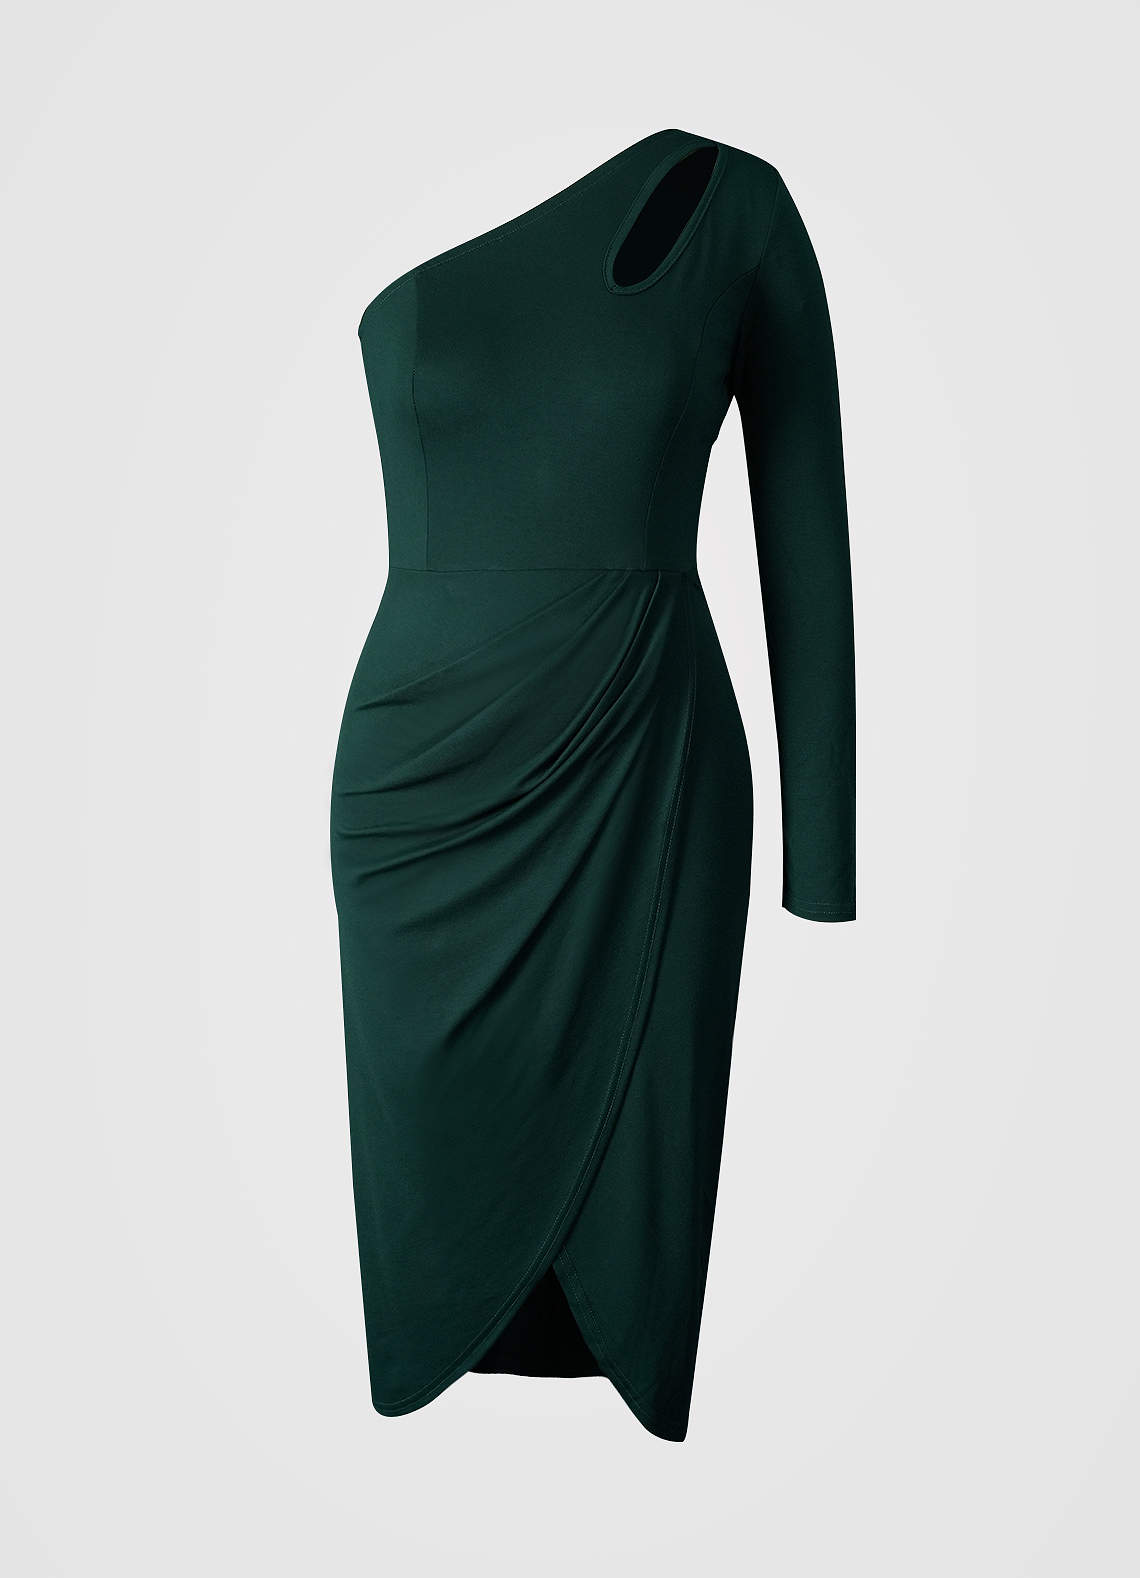 Alluring Image Dark Emerald One Shoulder Tulip Dress image1